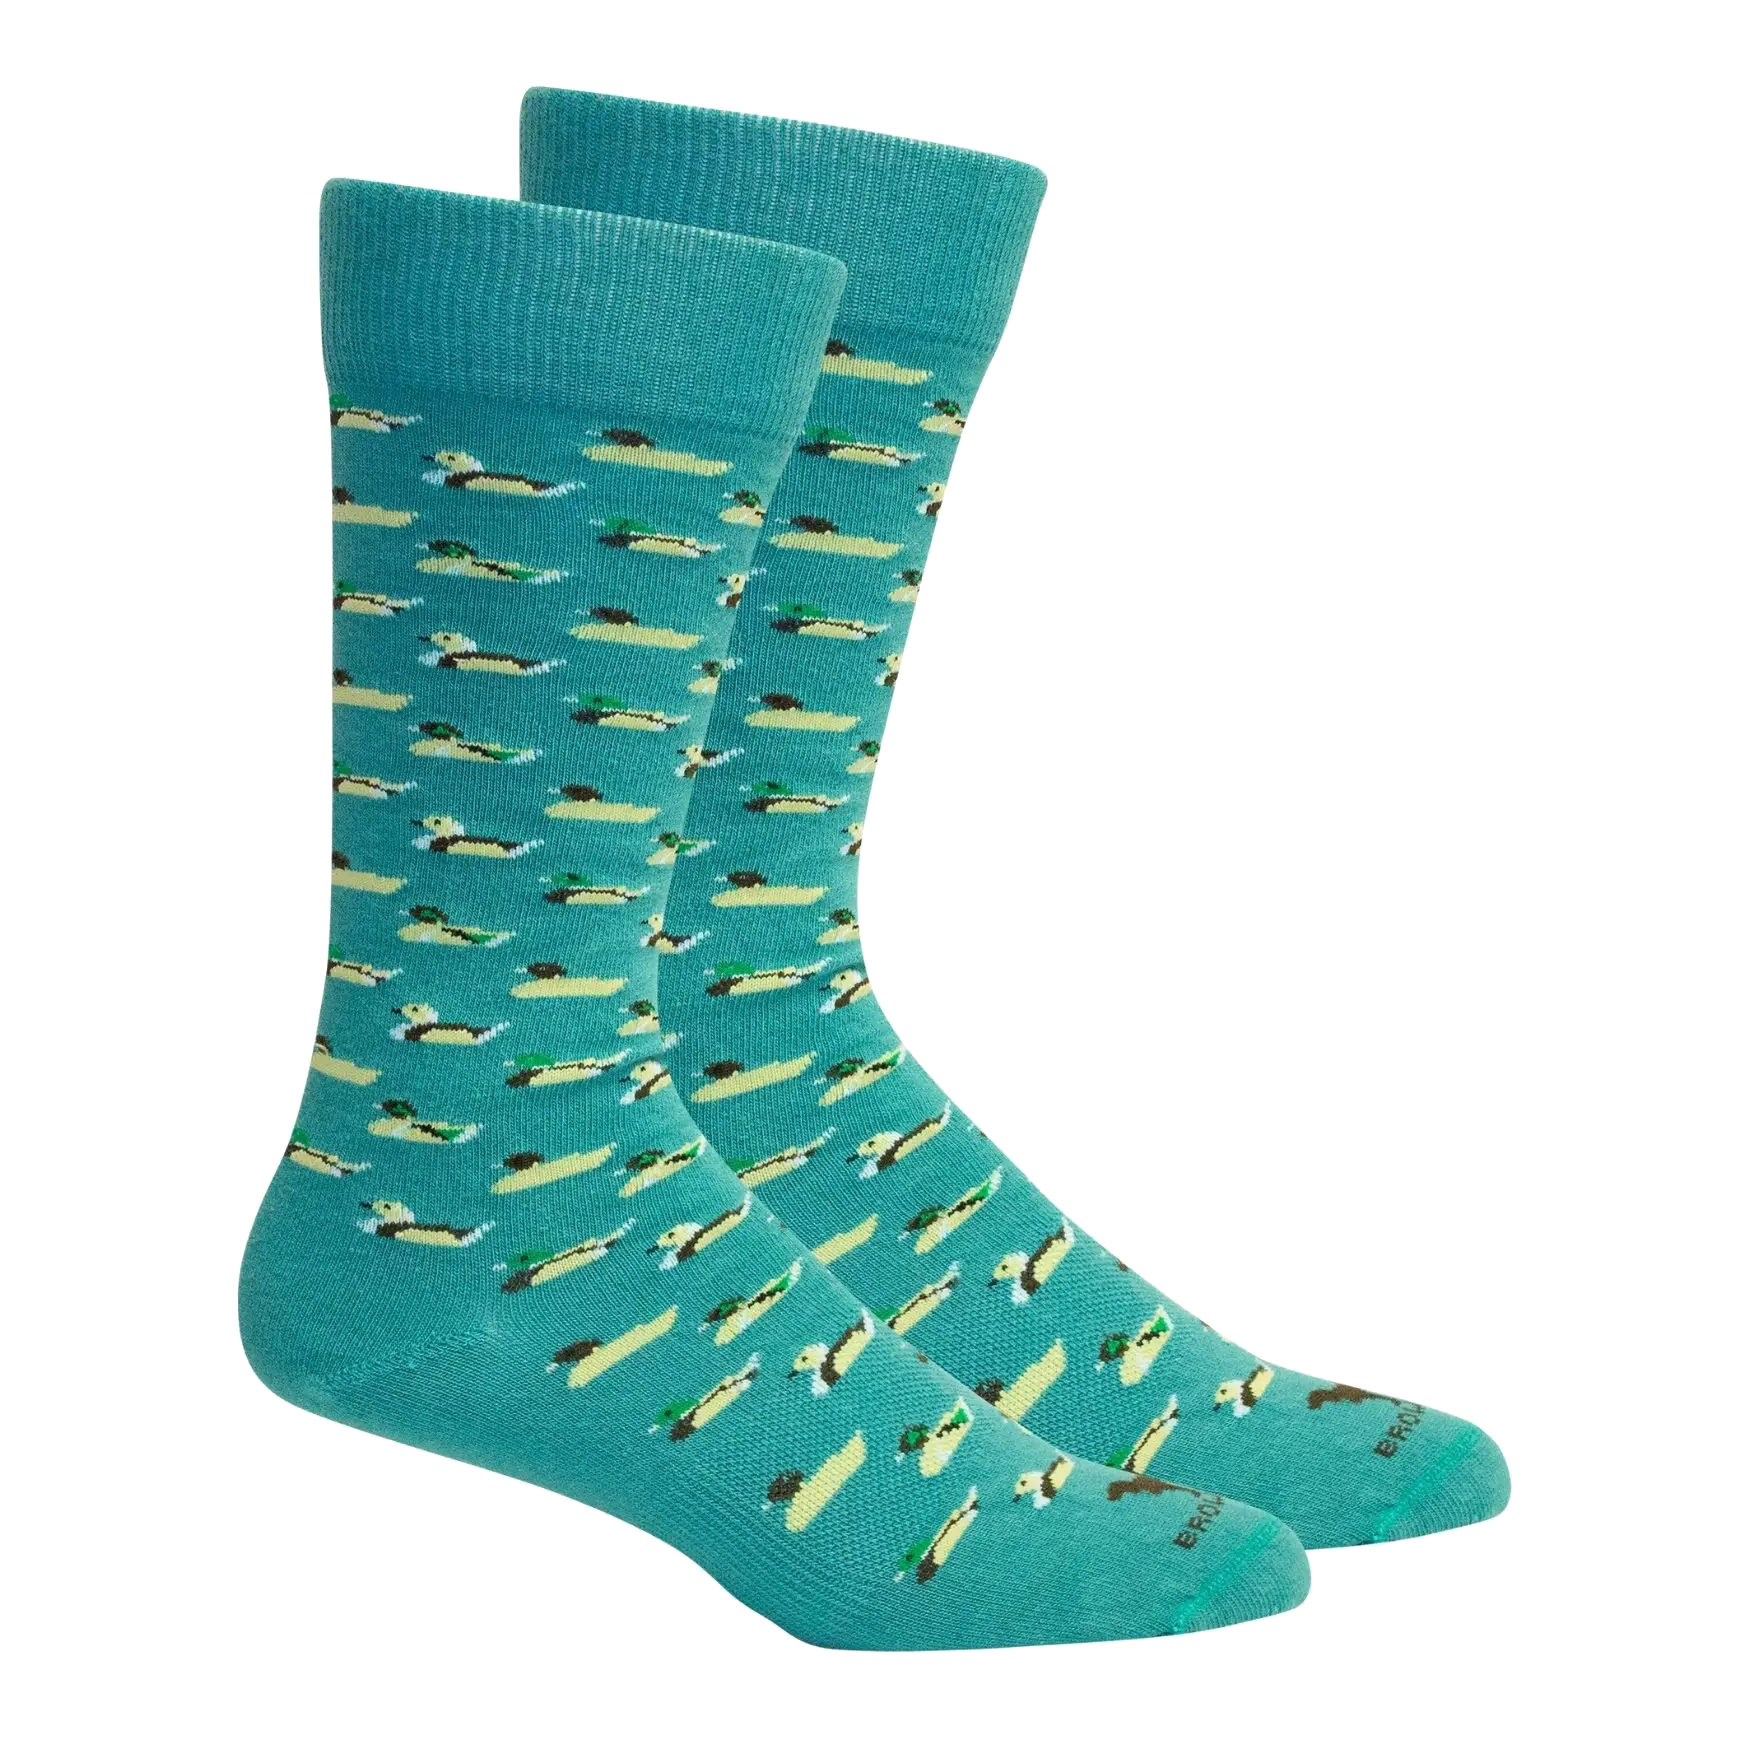 Currituck Socks - Teal - Clemson Sock Shop